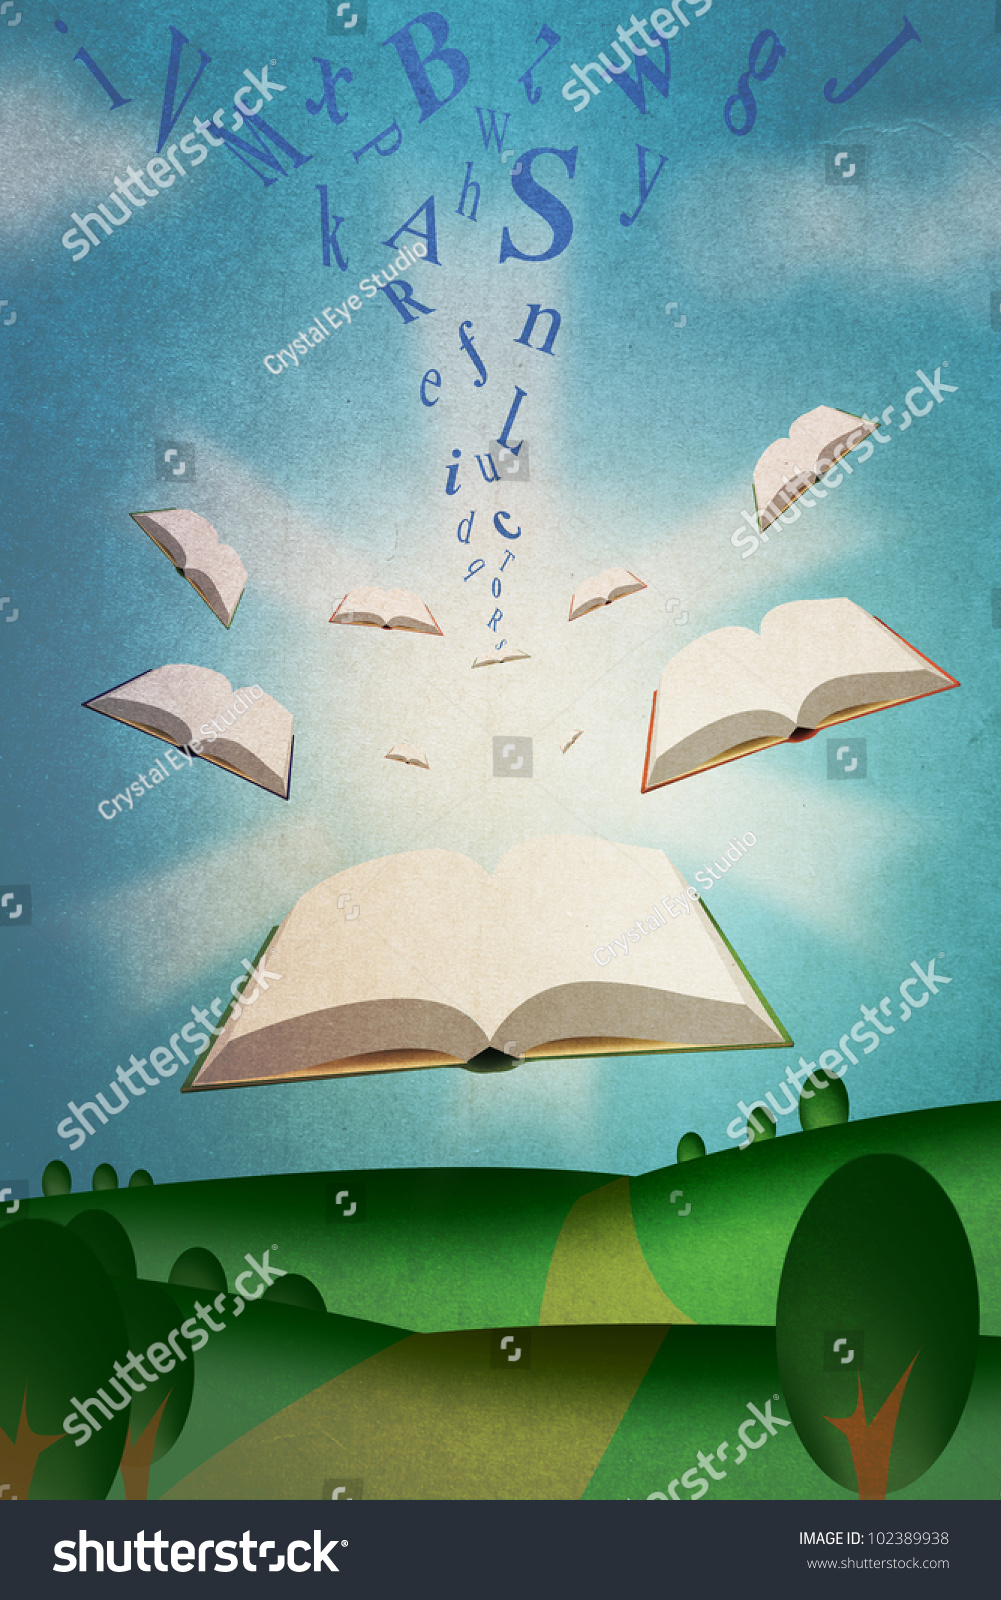 Flying Books Illustration with Roman Alphabet Texts #102389938